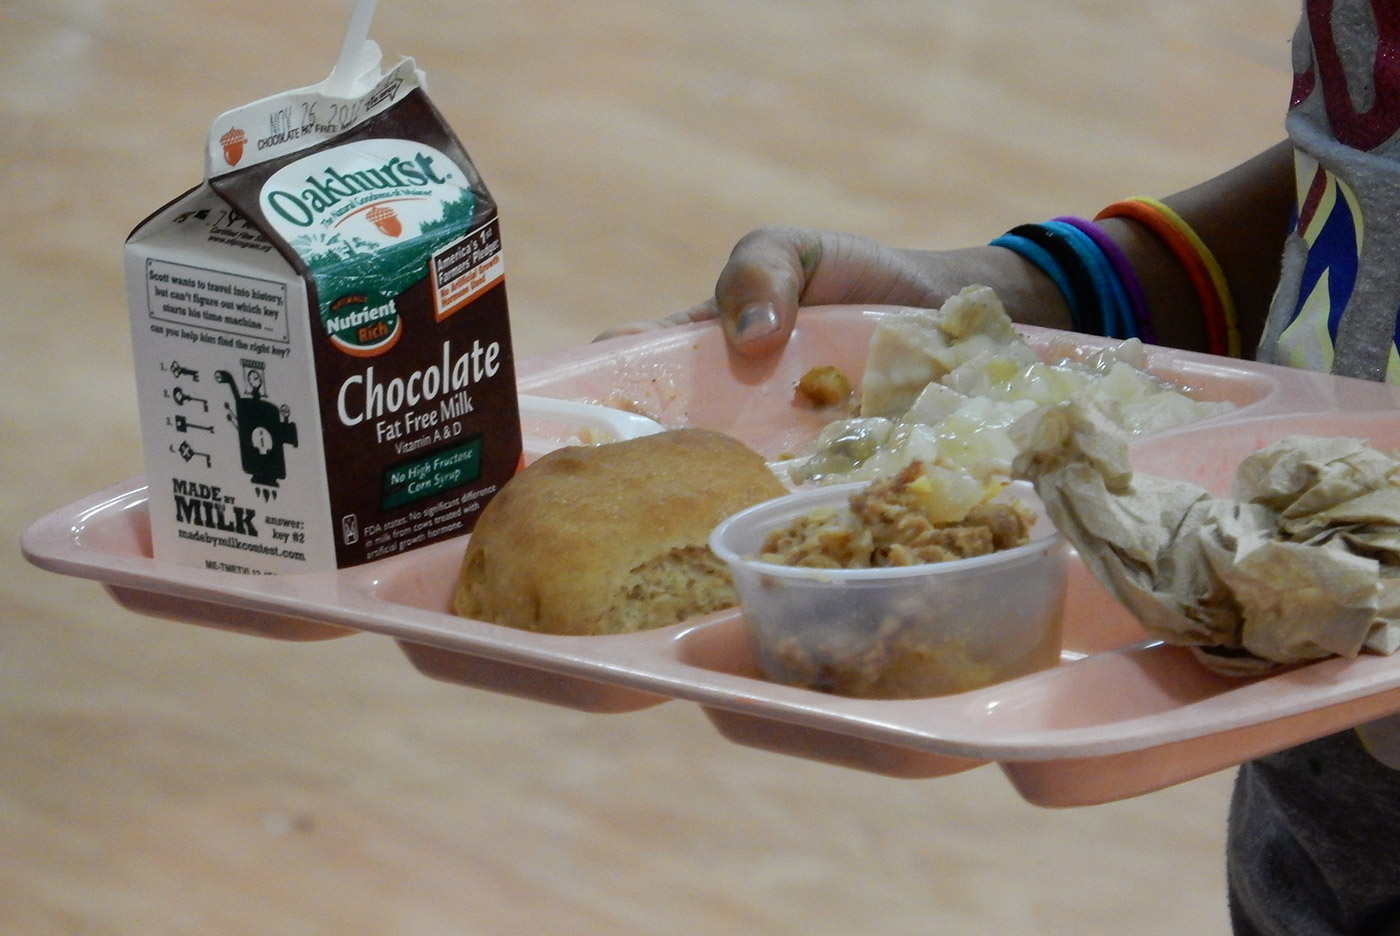 cafeteria food waste